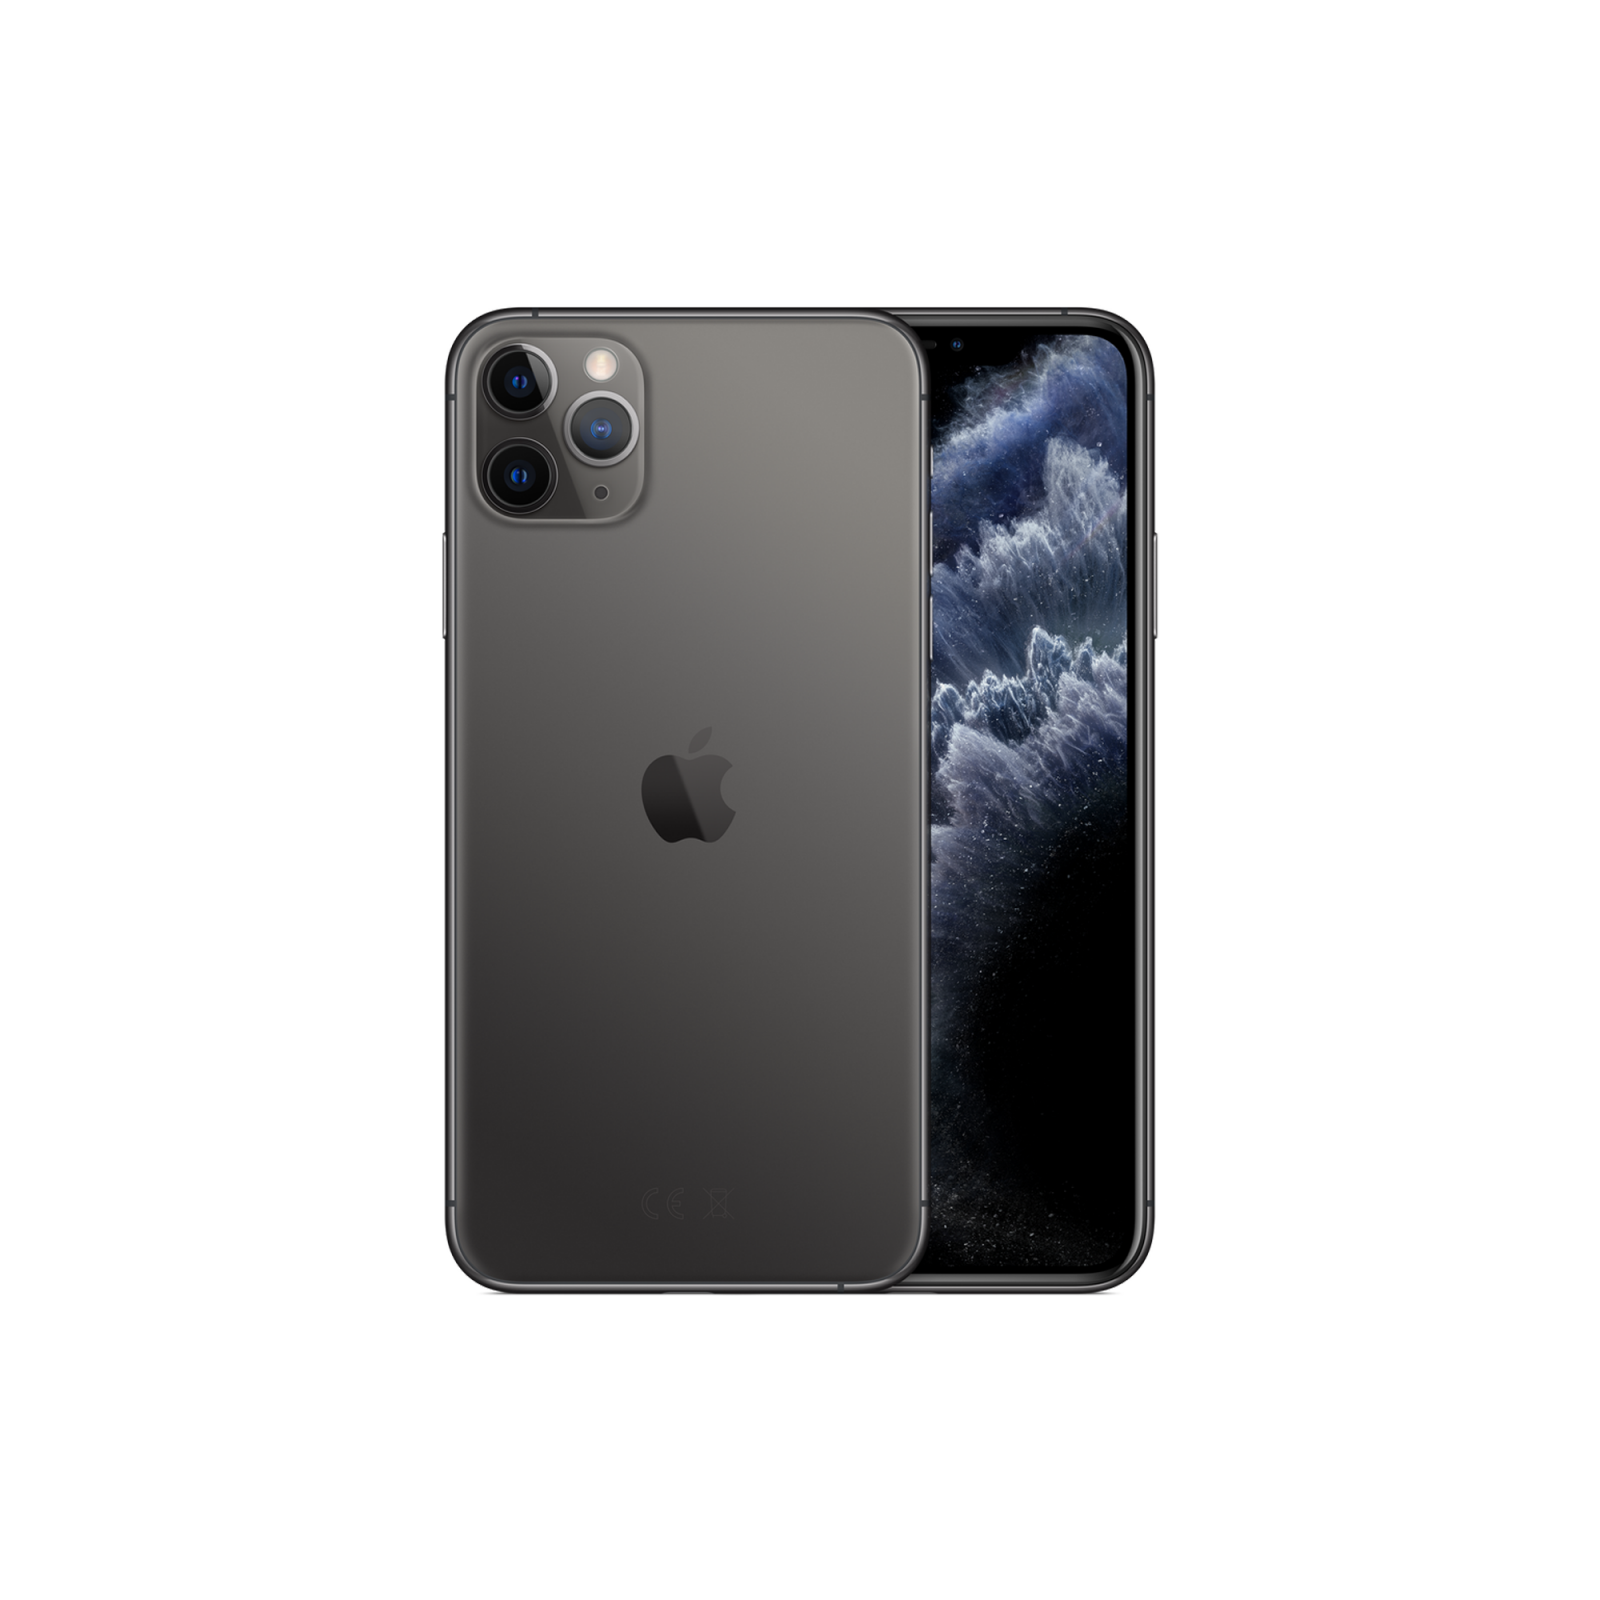 Apple iPhone 11 Pro Max 64gb space grey